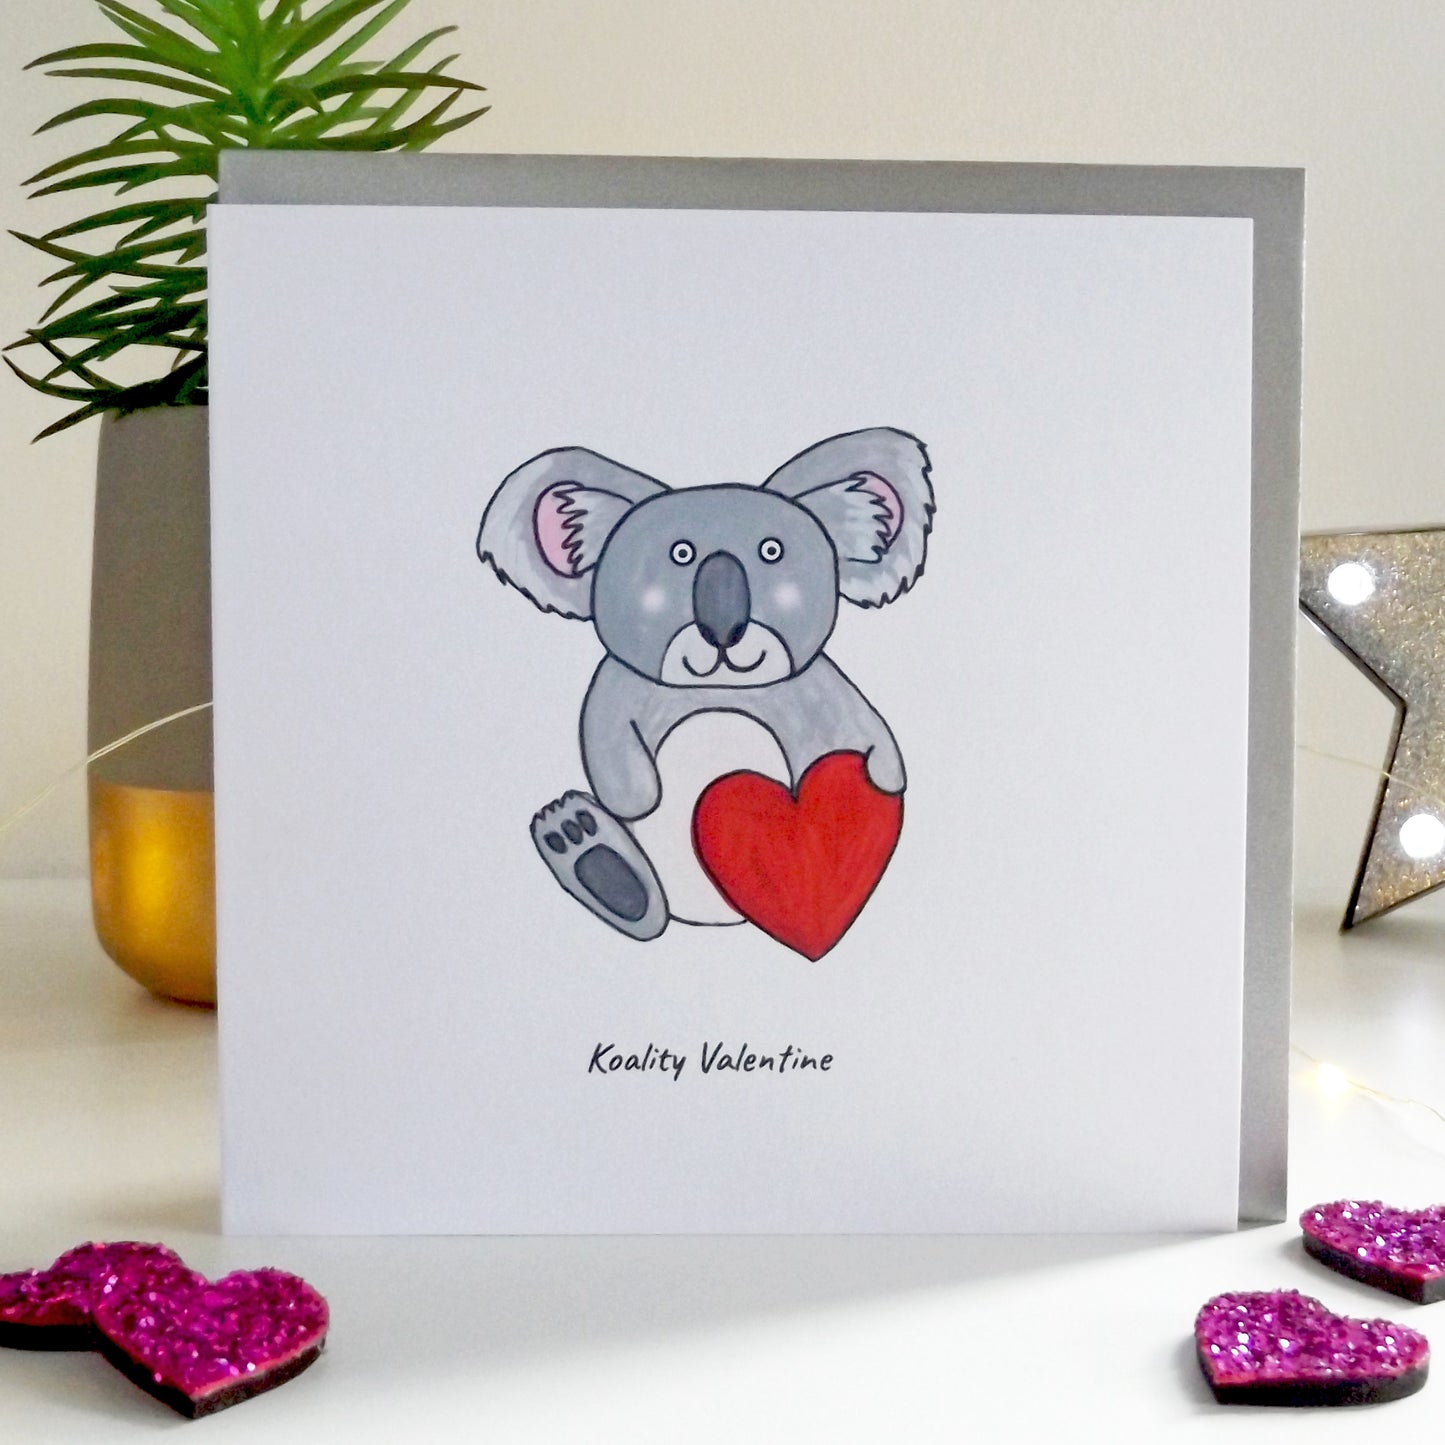 Koality Valentine - funny Koala valentine's card